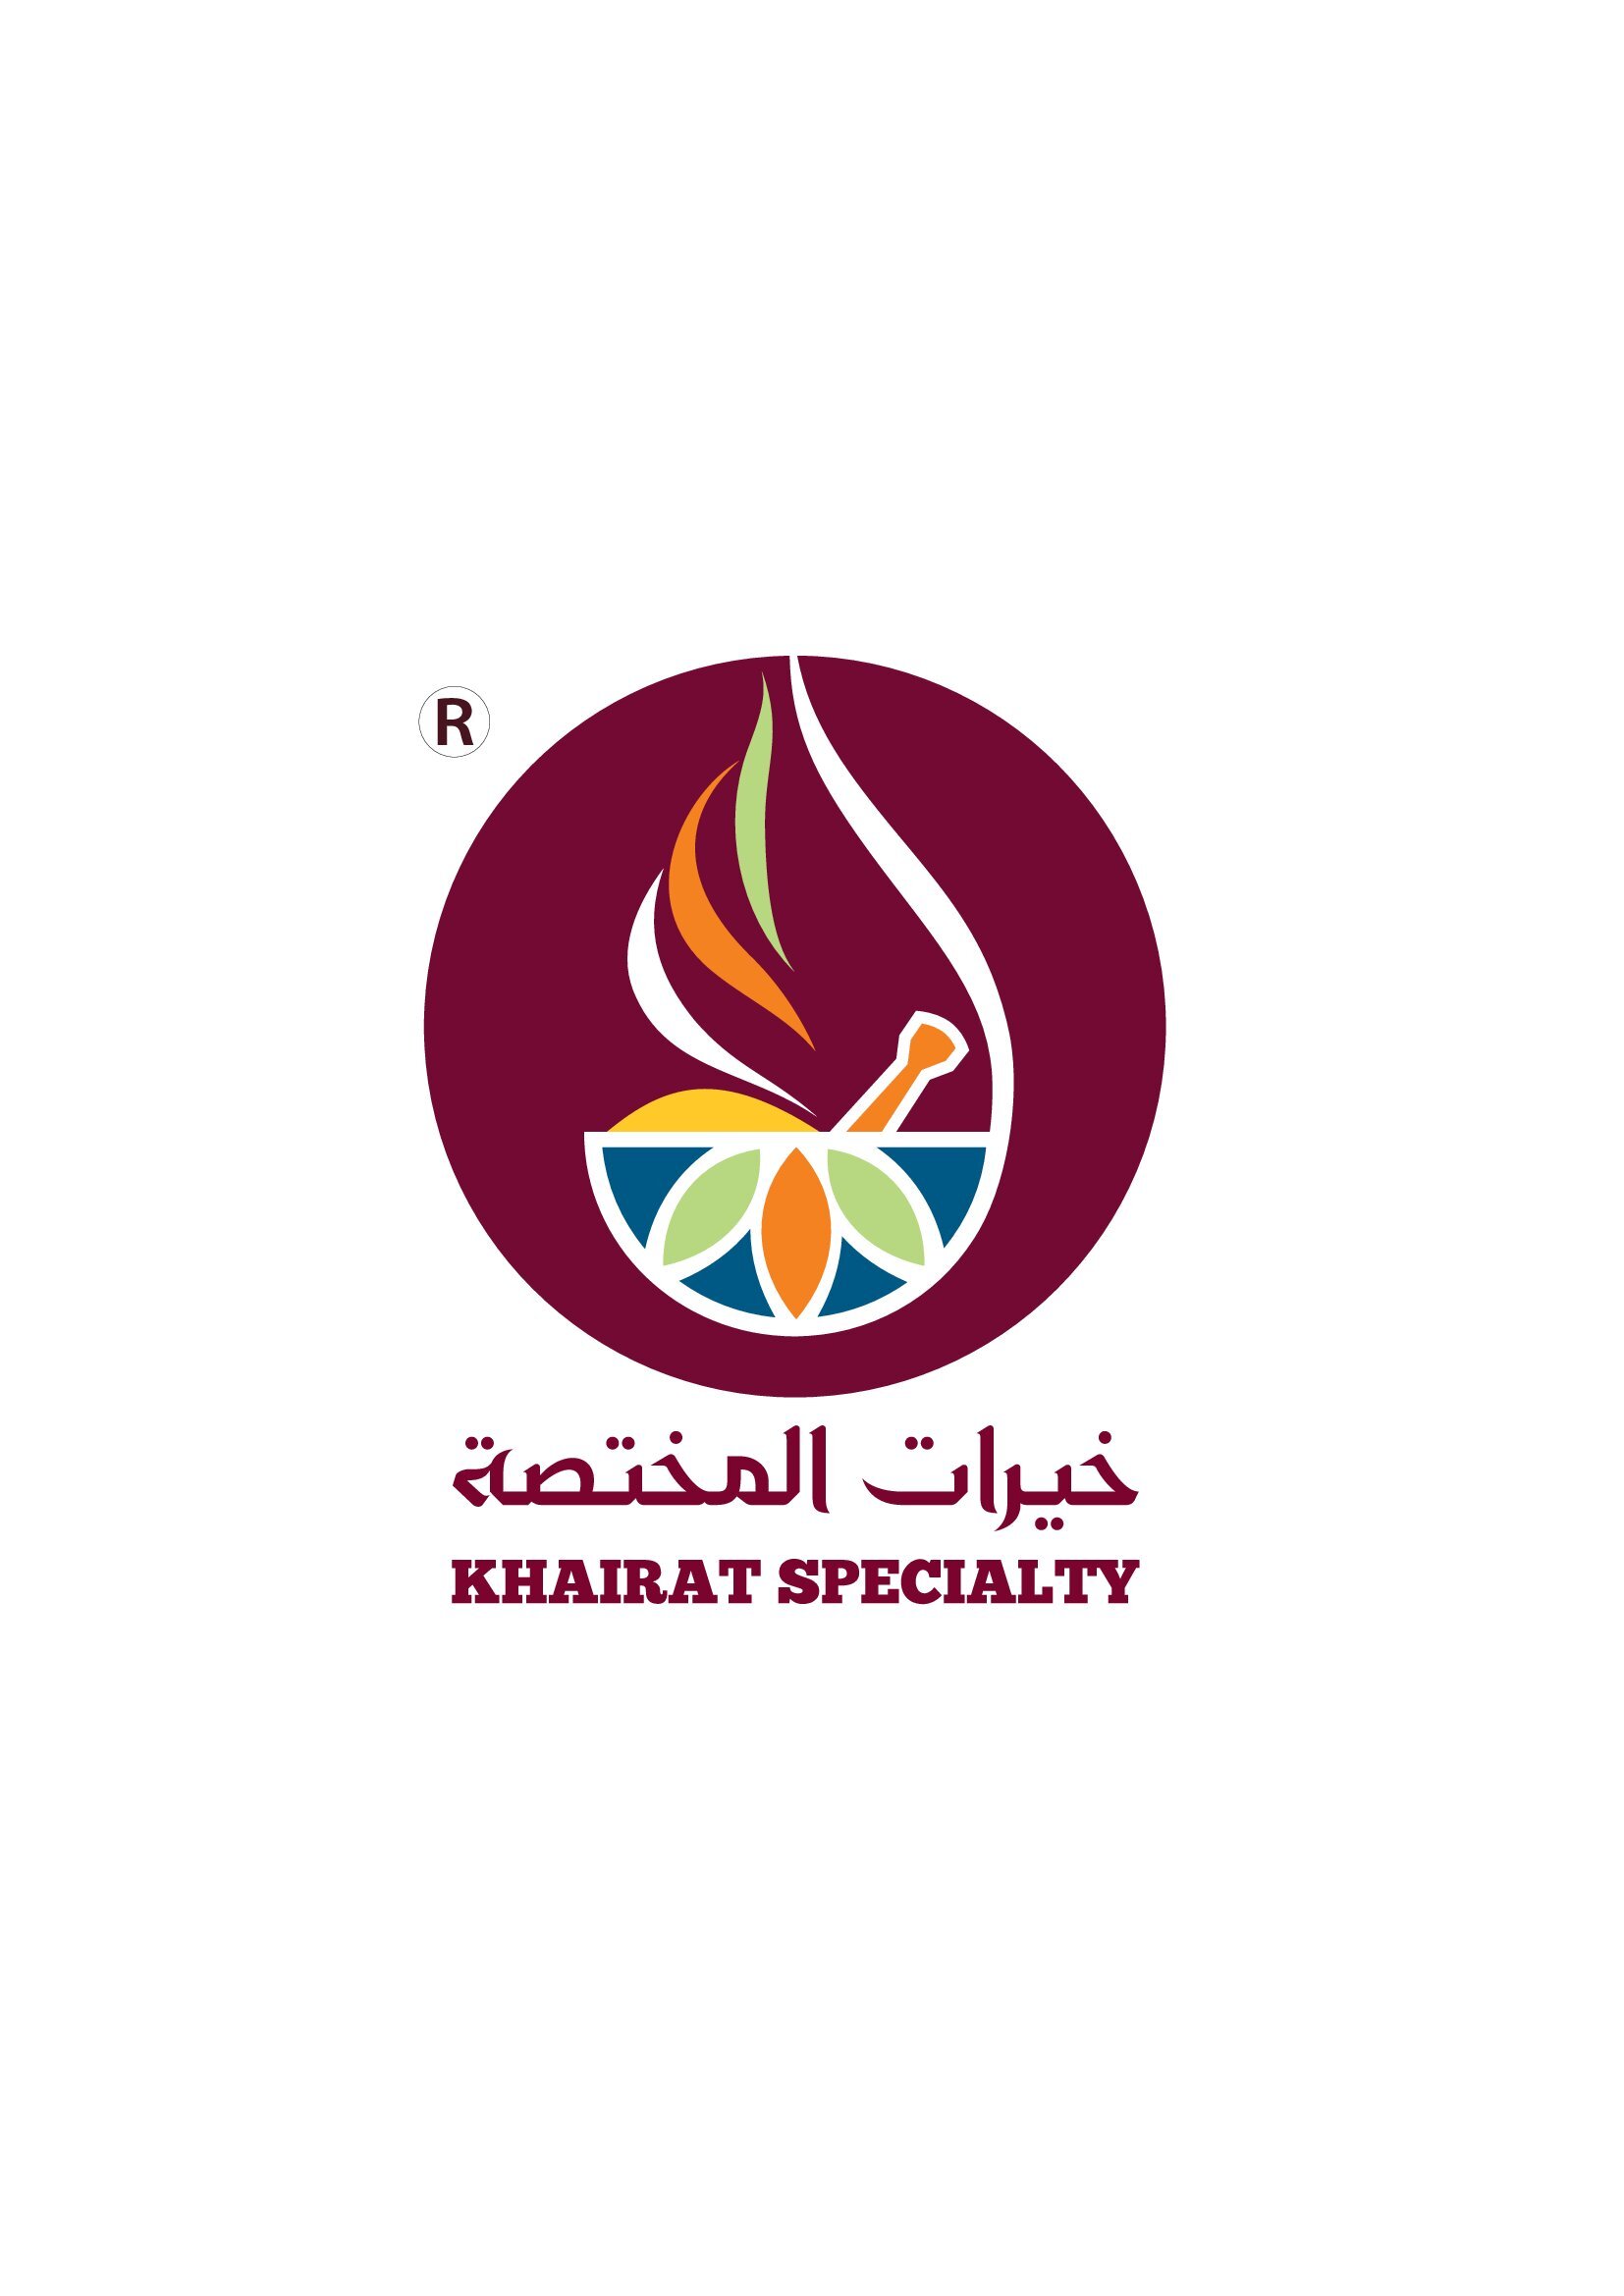 KHAIRAT SPECIALTY